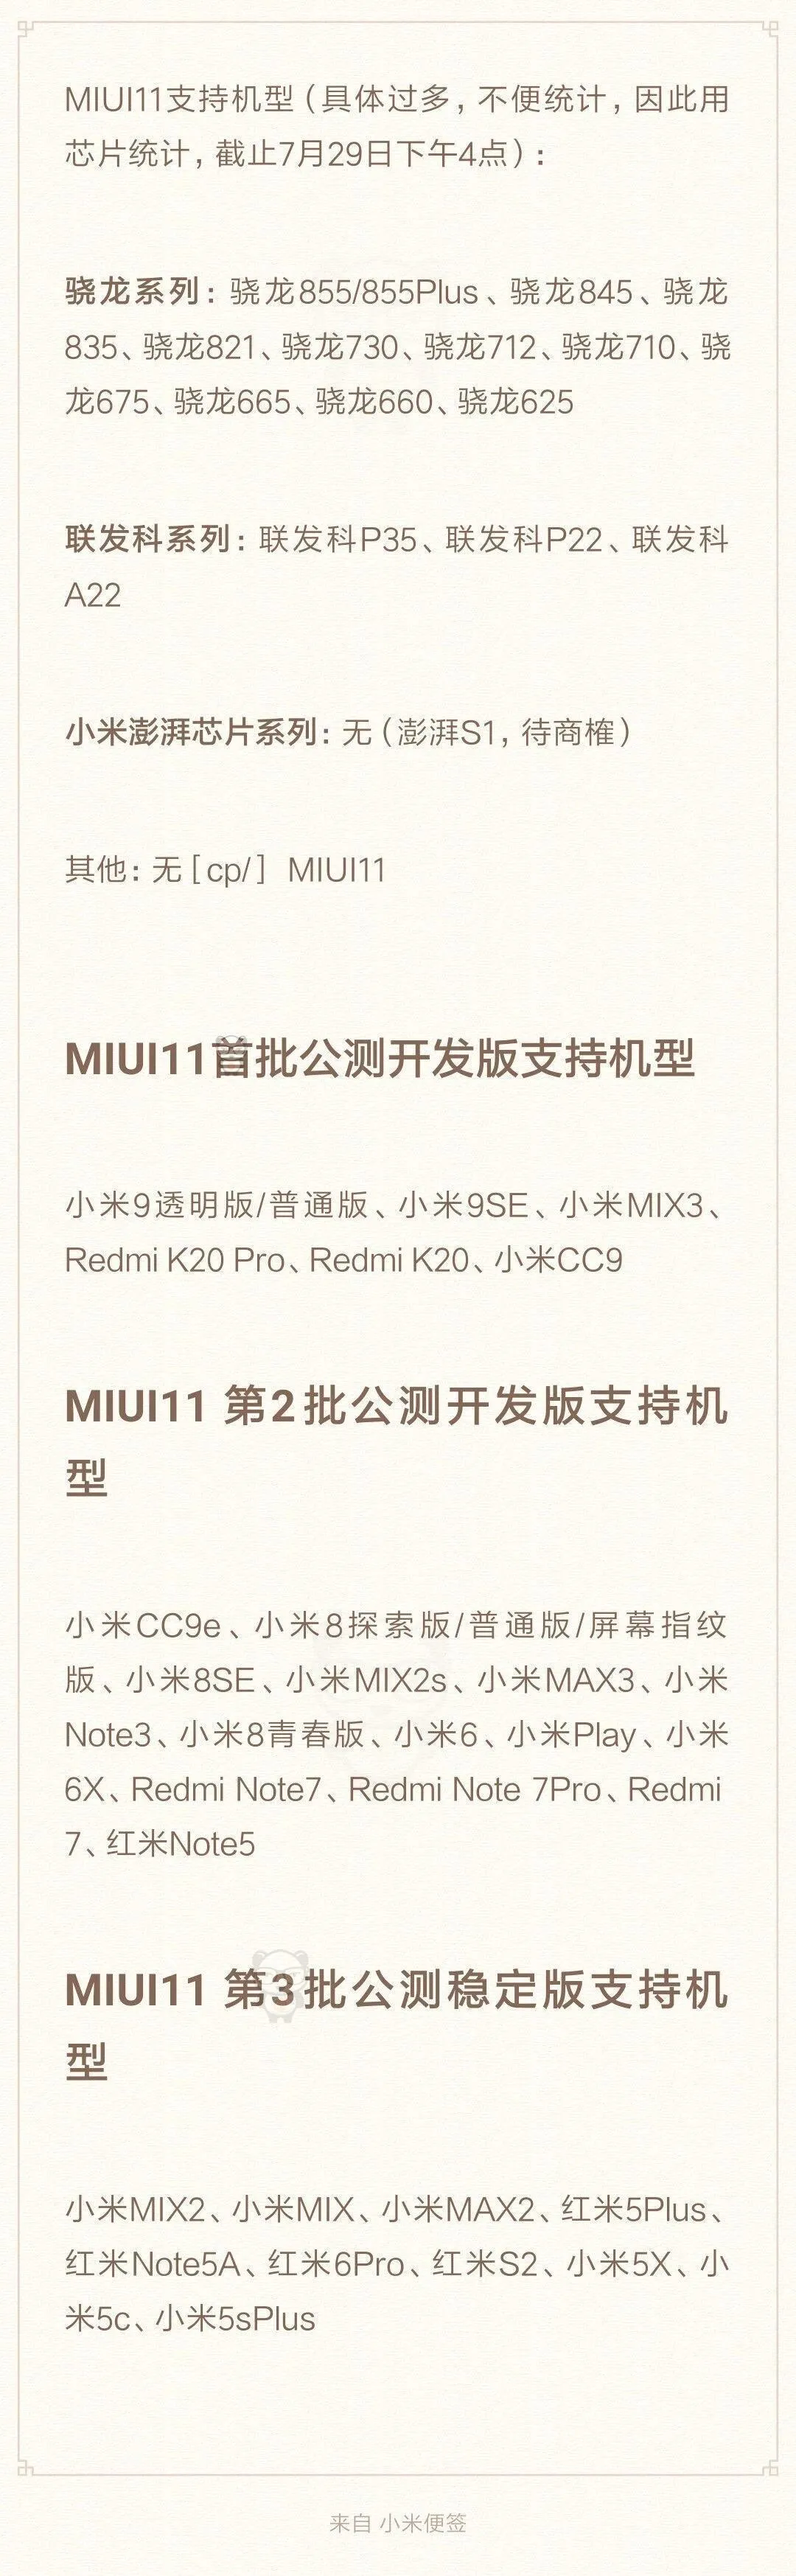 Прошивка Xiaomi MIUI 11